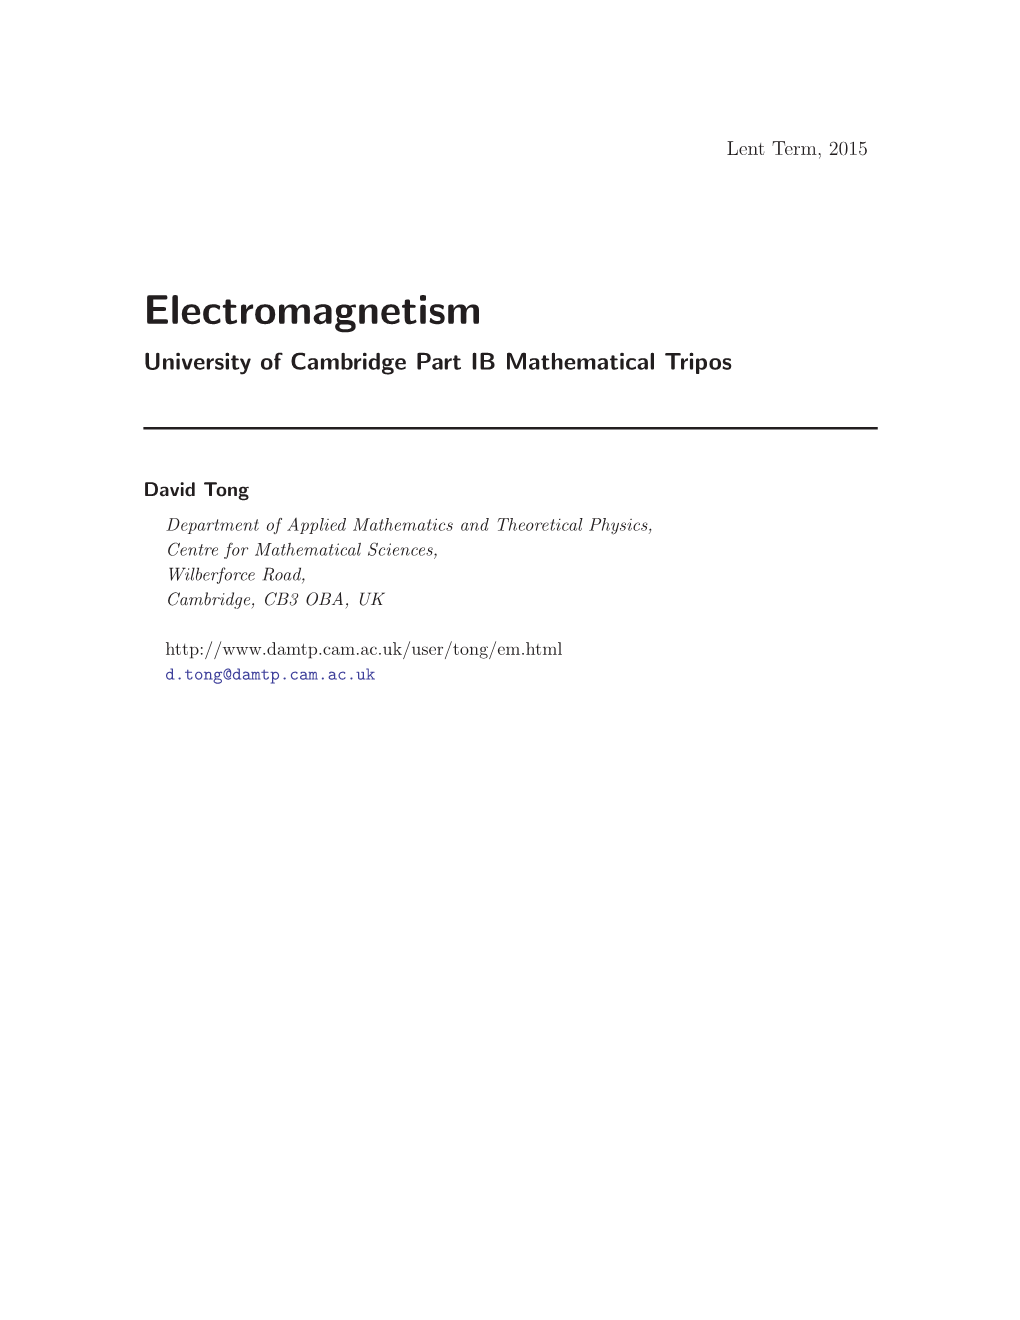 Electromagnetism University of Cambridge Part IB Mathematical Tripos